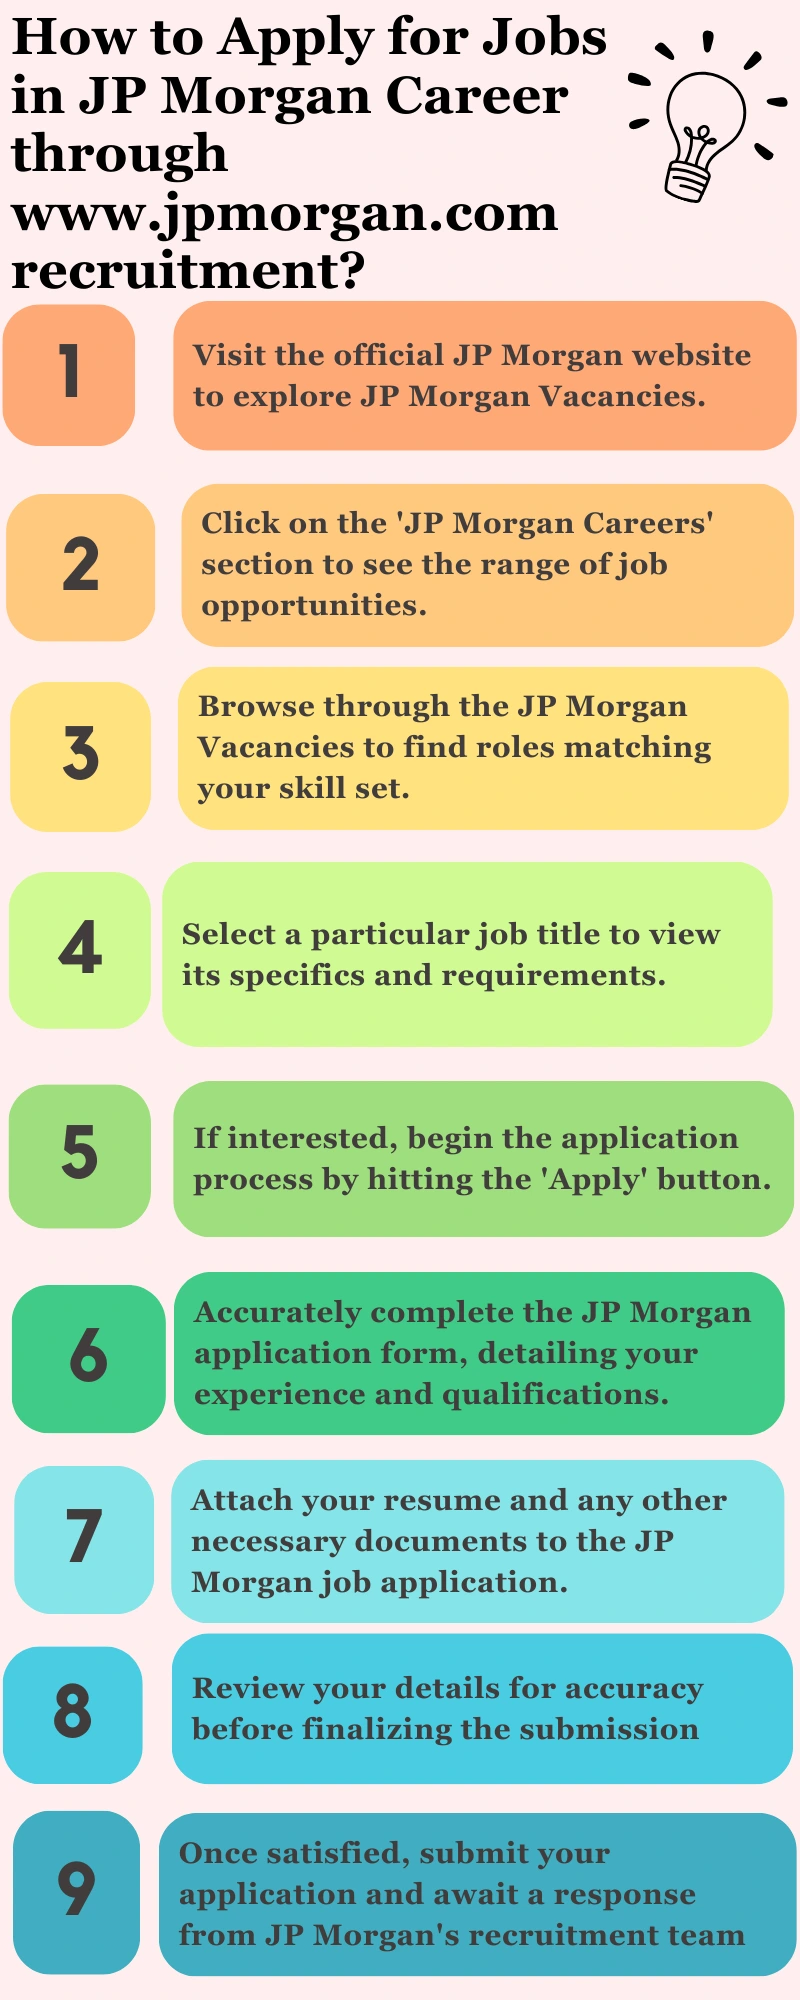 How to Apply for Jobs in JP Morgan Career through www.jpmorgan.com recruitment